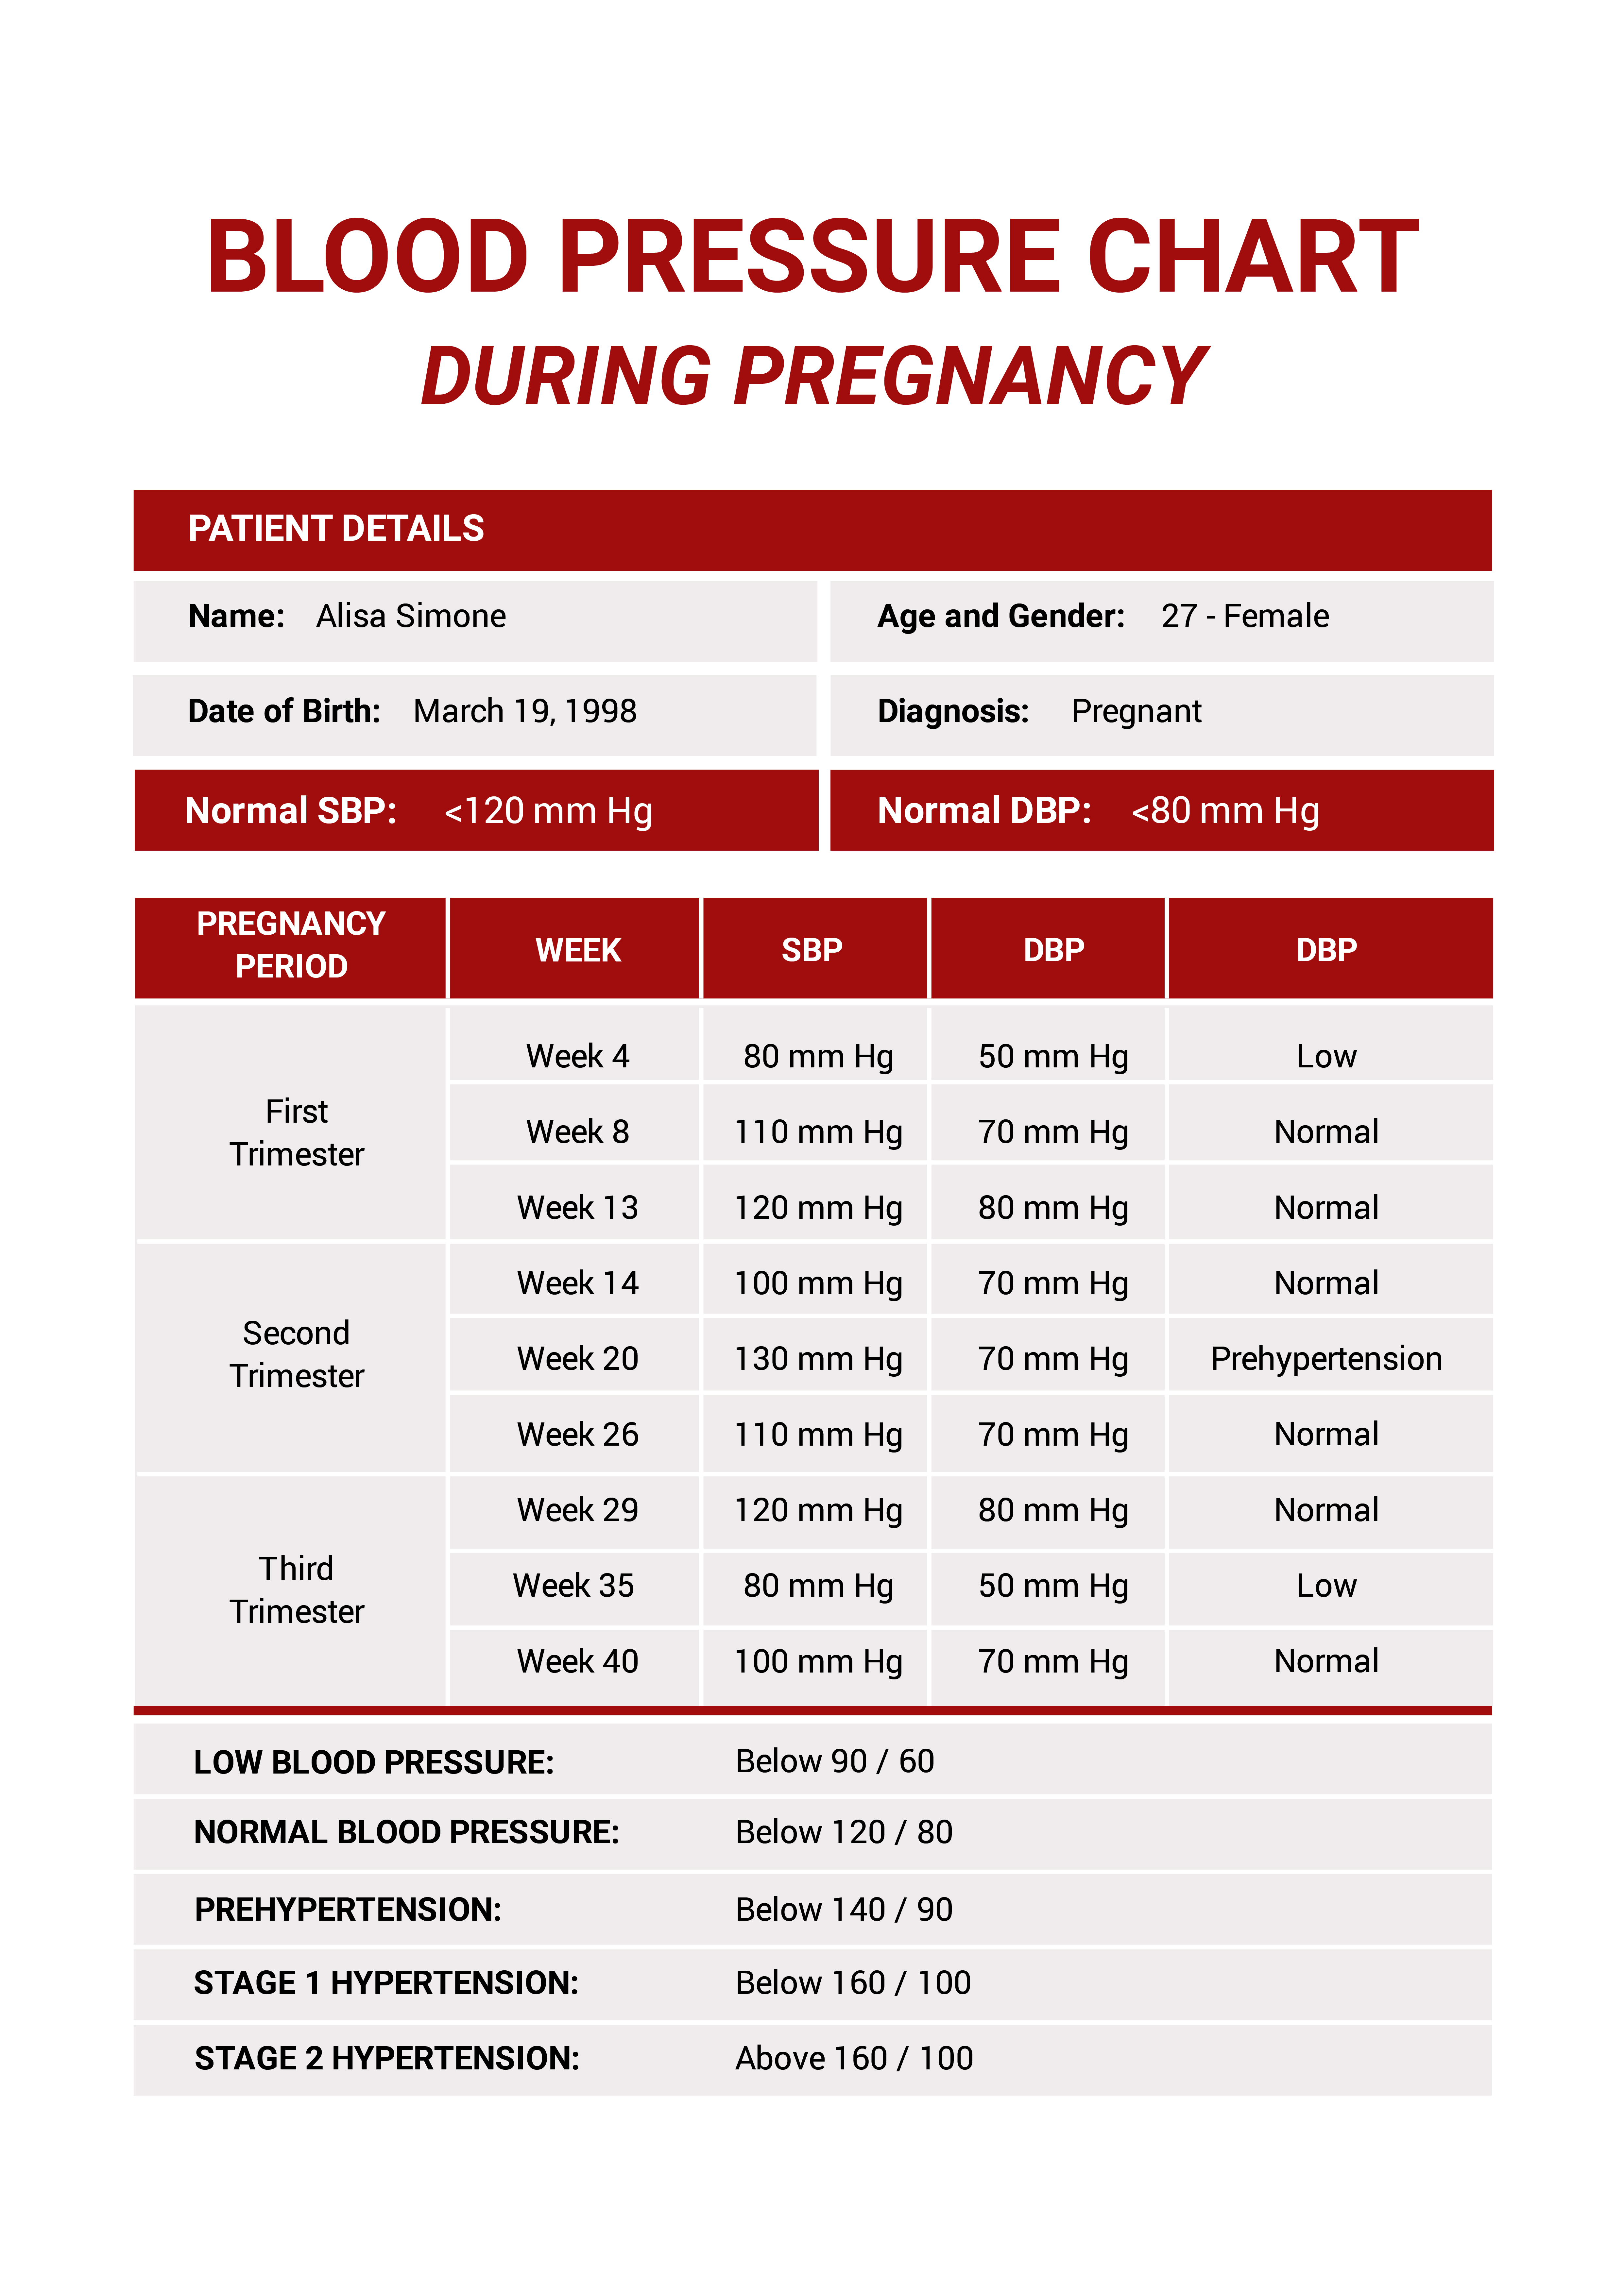 https://images.template.net/93520/normal-blood-pressure-range-during-pregnancy-chart-bqdu7.jpg